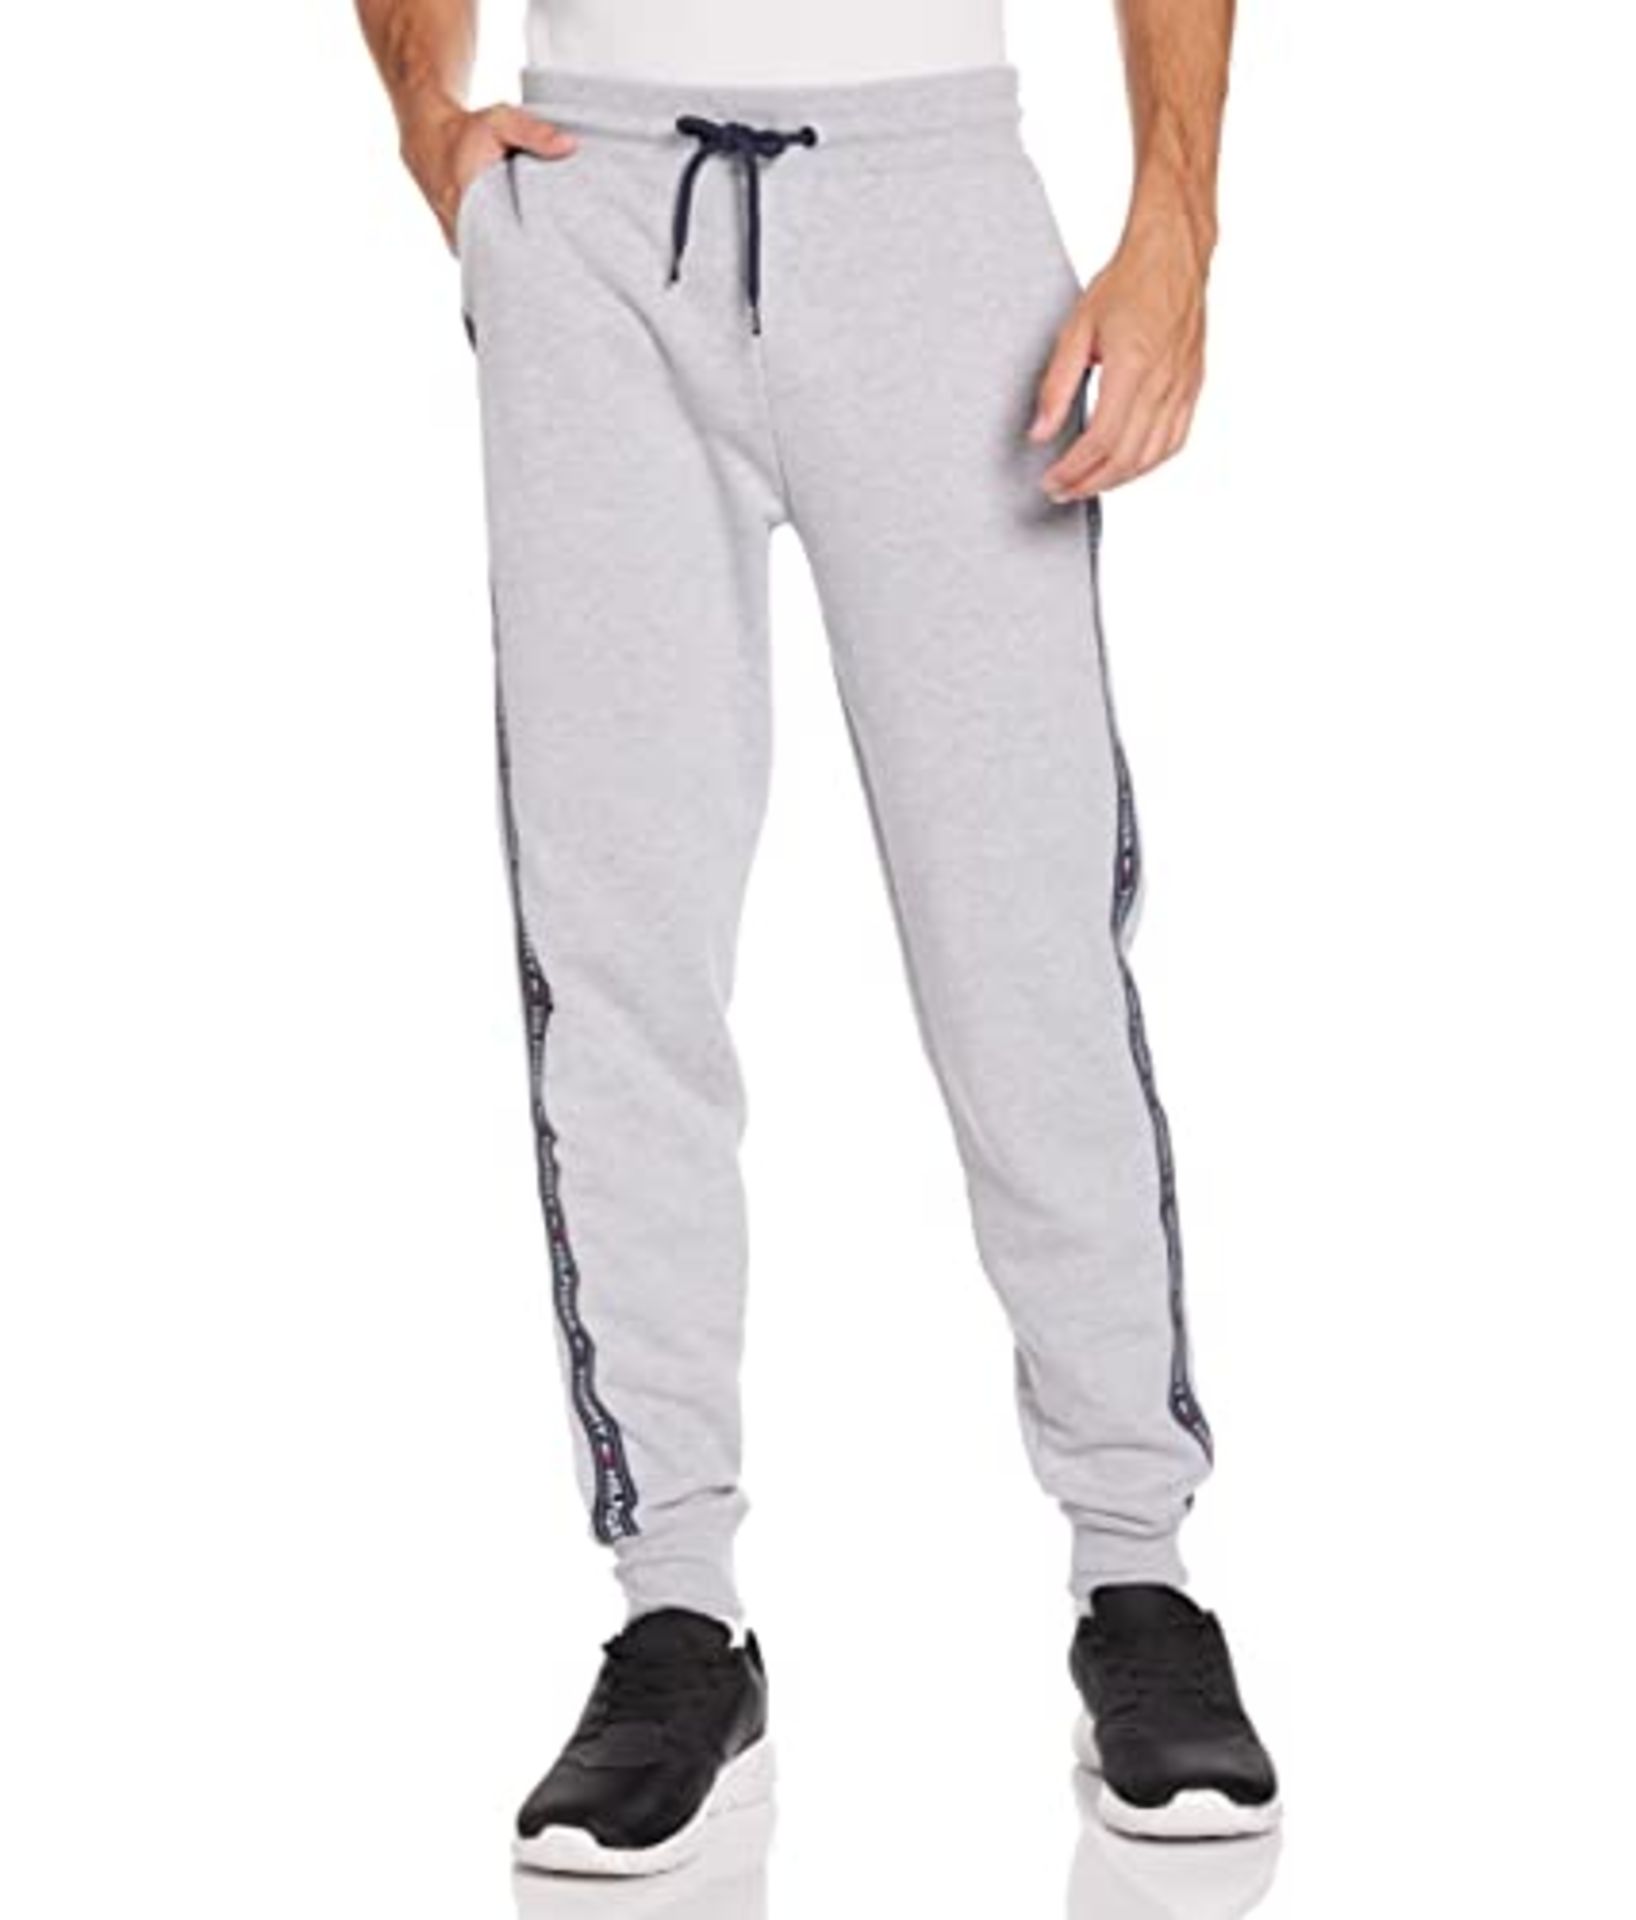 Tommy Hilfiger Men's Jogging Pants Sweatpants Long, Grey (Grey Heather), S